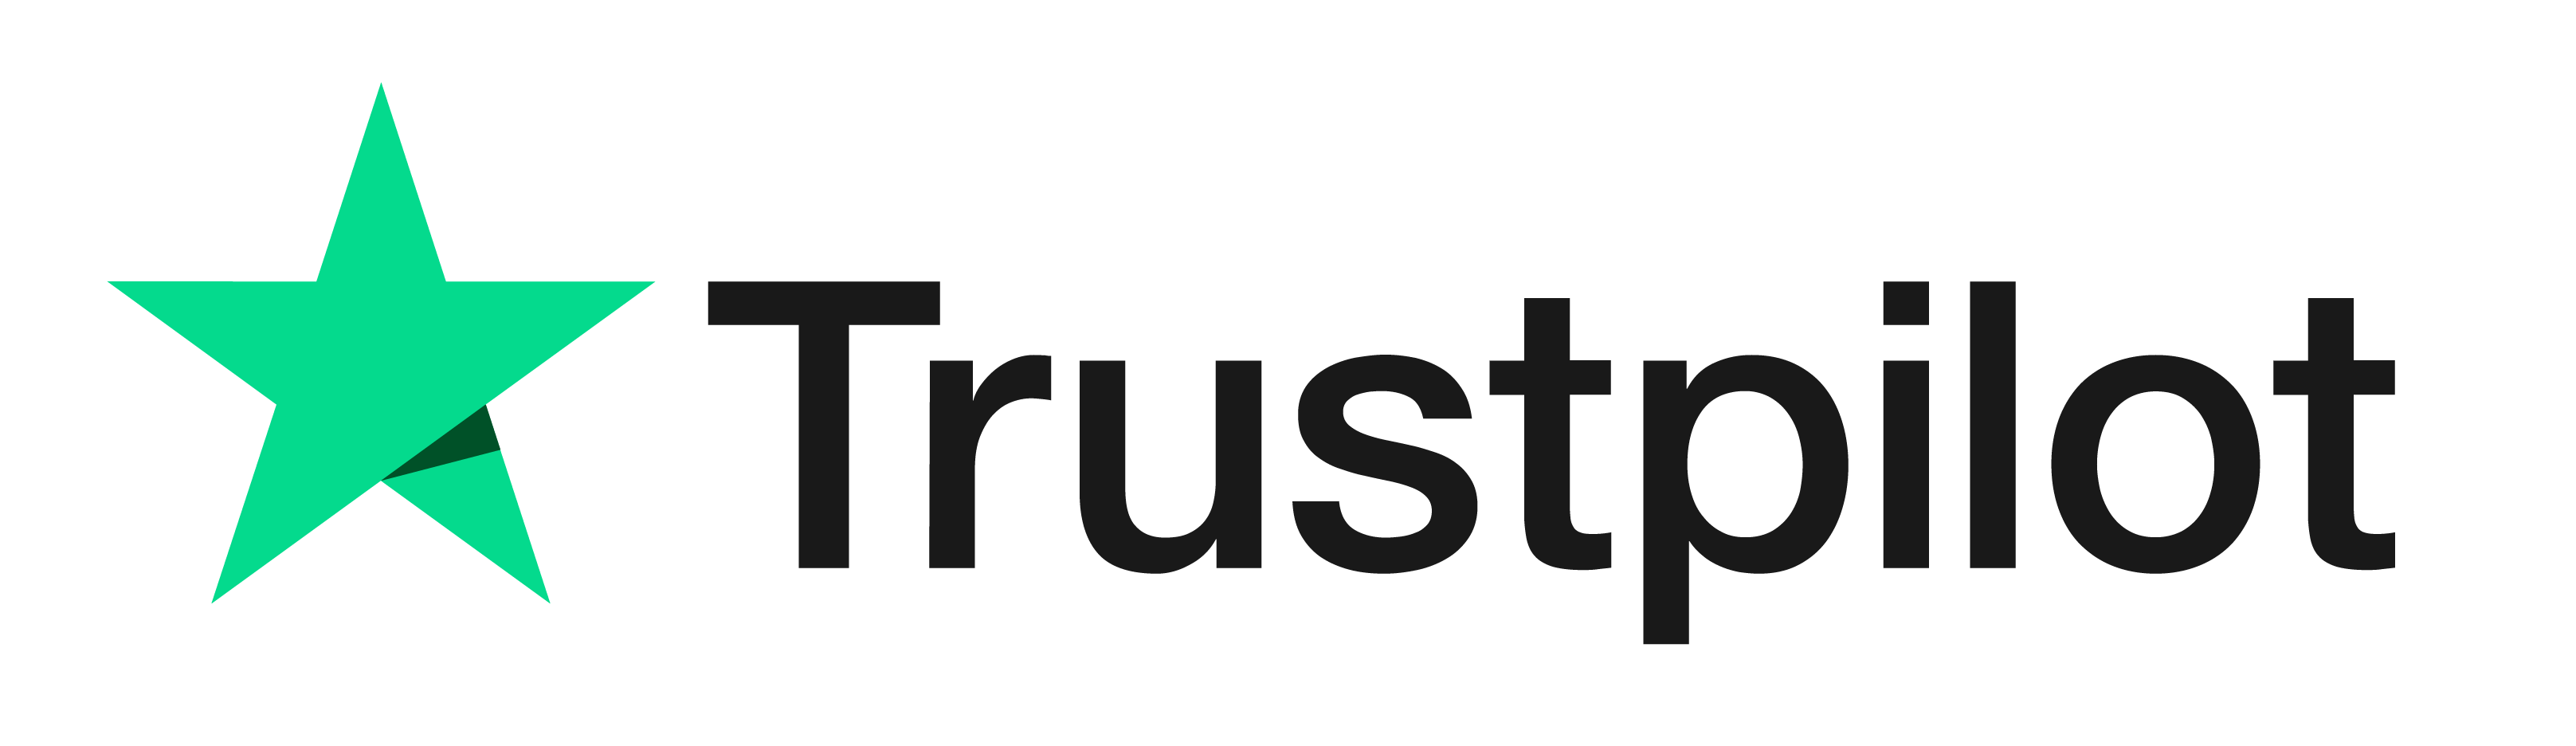 Trustpilot logo wit